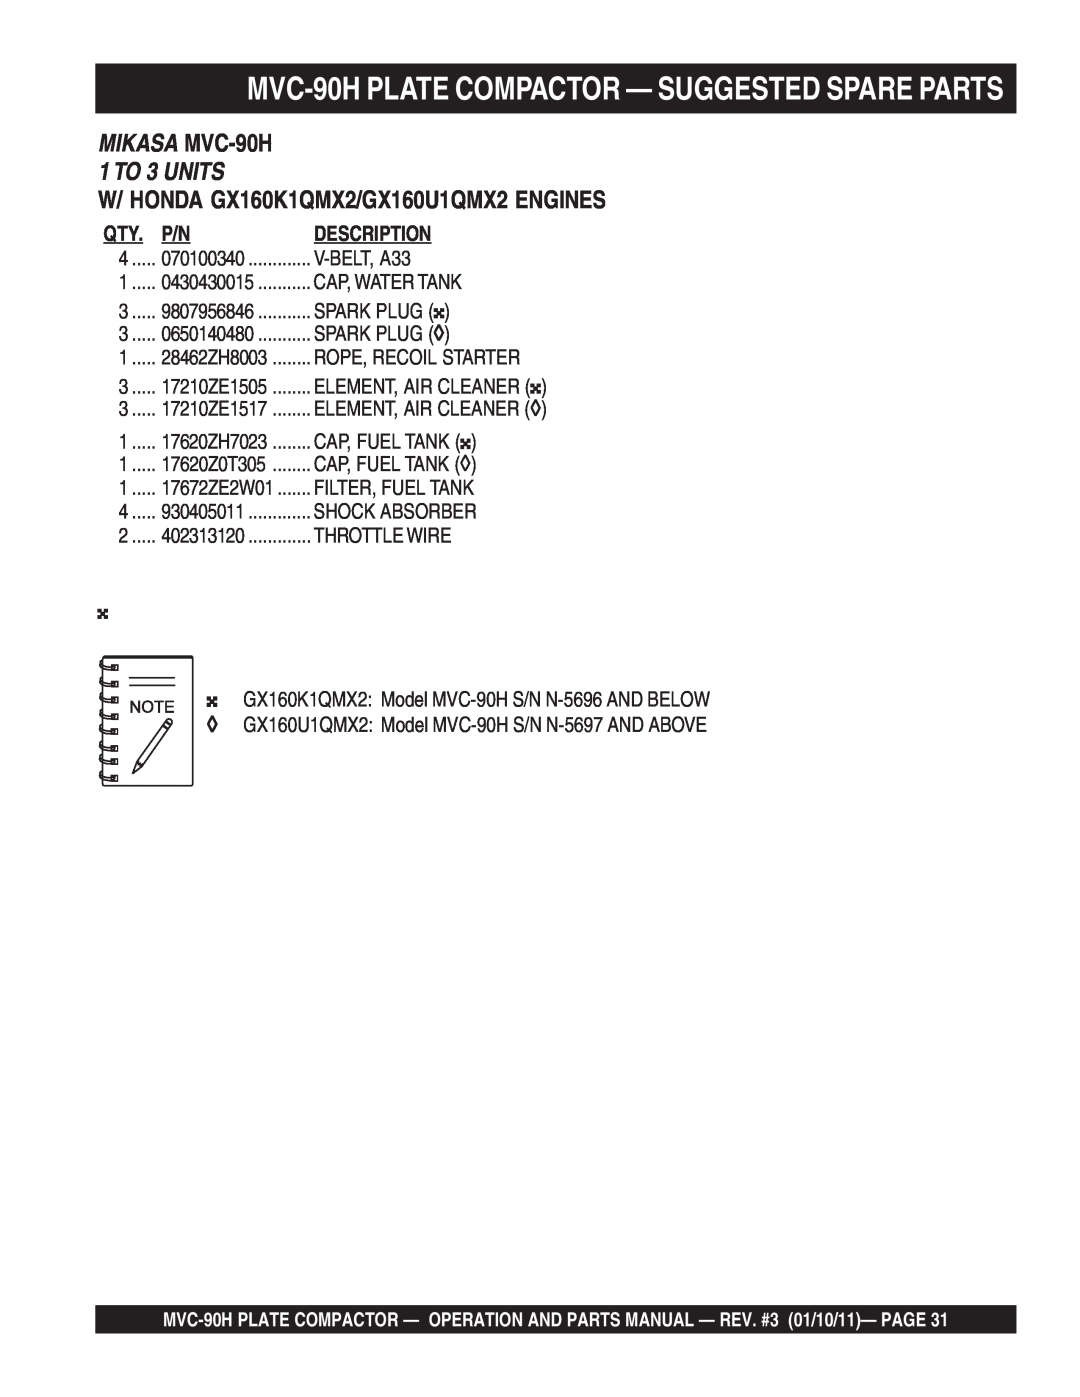 Multiquip manual MVC-90HPLATE COMPACTOR - SUGGESTED SPARE PARTS, Description, W/ HONDA GX160K1QMX2/GX160U1QMX2 ENGINES 